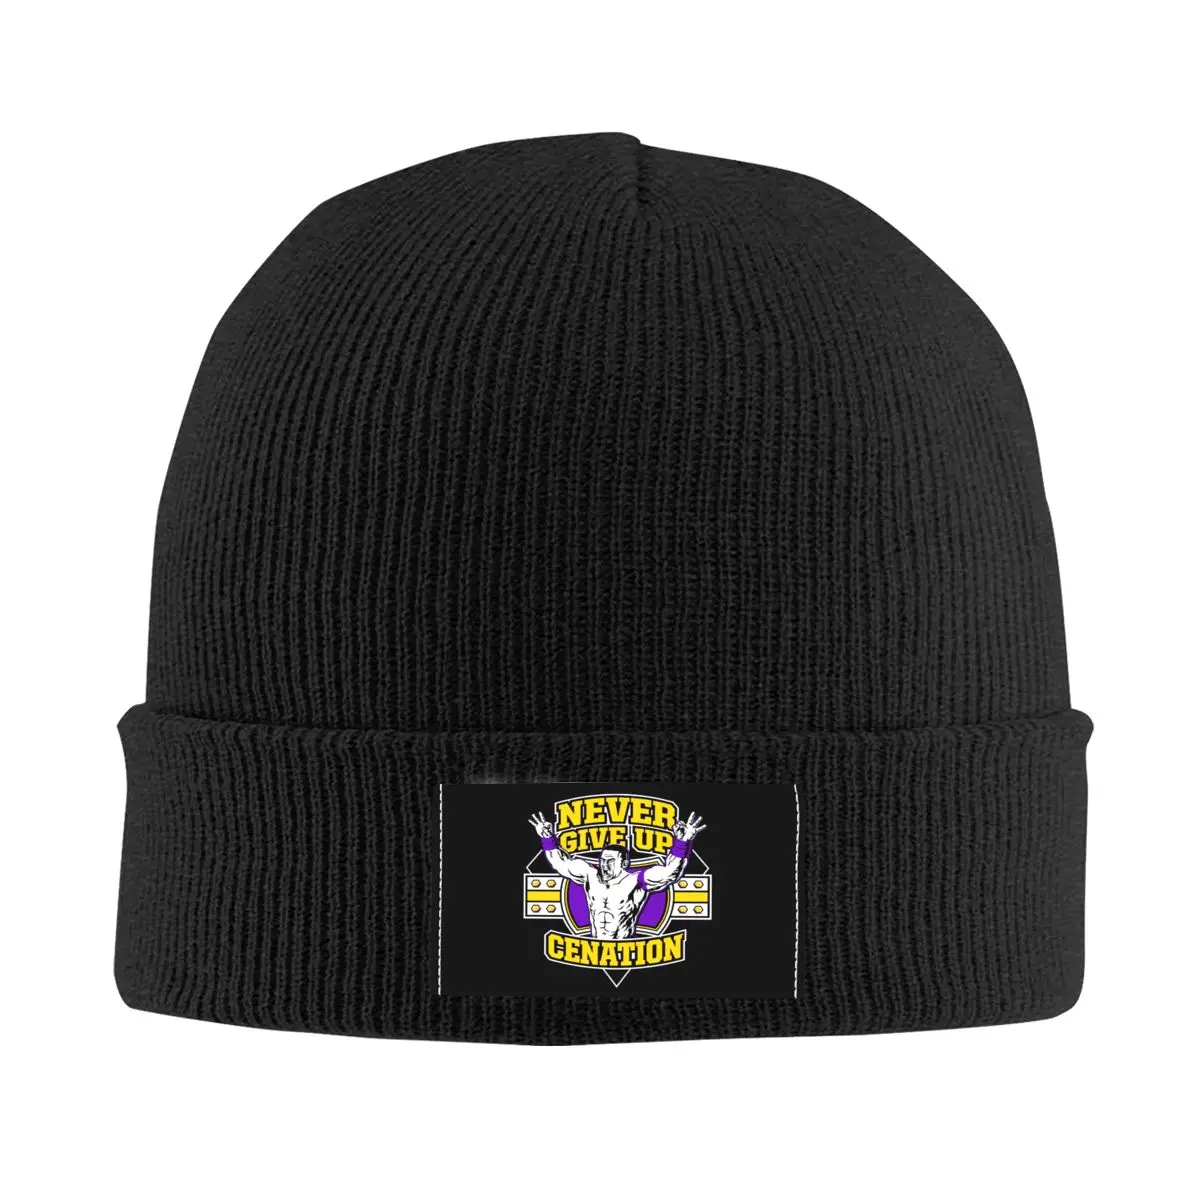 WWE John Cenas Bonnet Hats Fashion Knit Hat For Men Women Autumn Winter Warm Never Give Up Skullies Beanies Caps 1